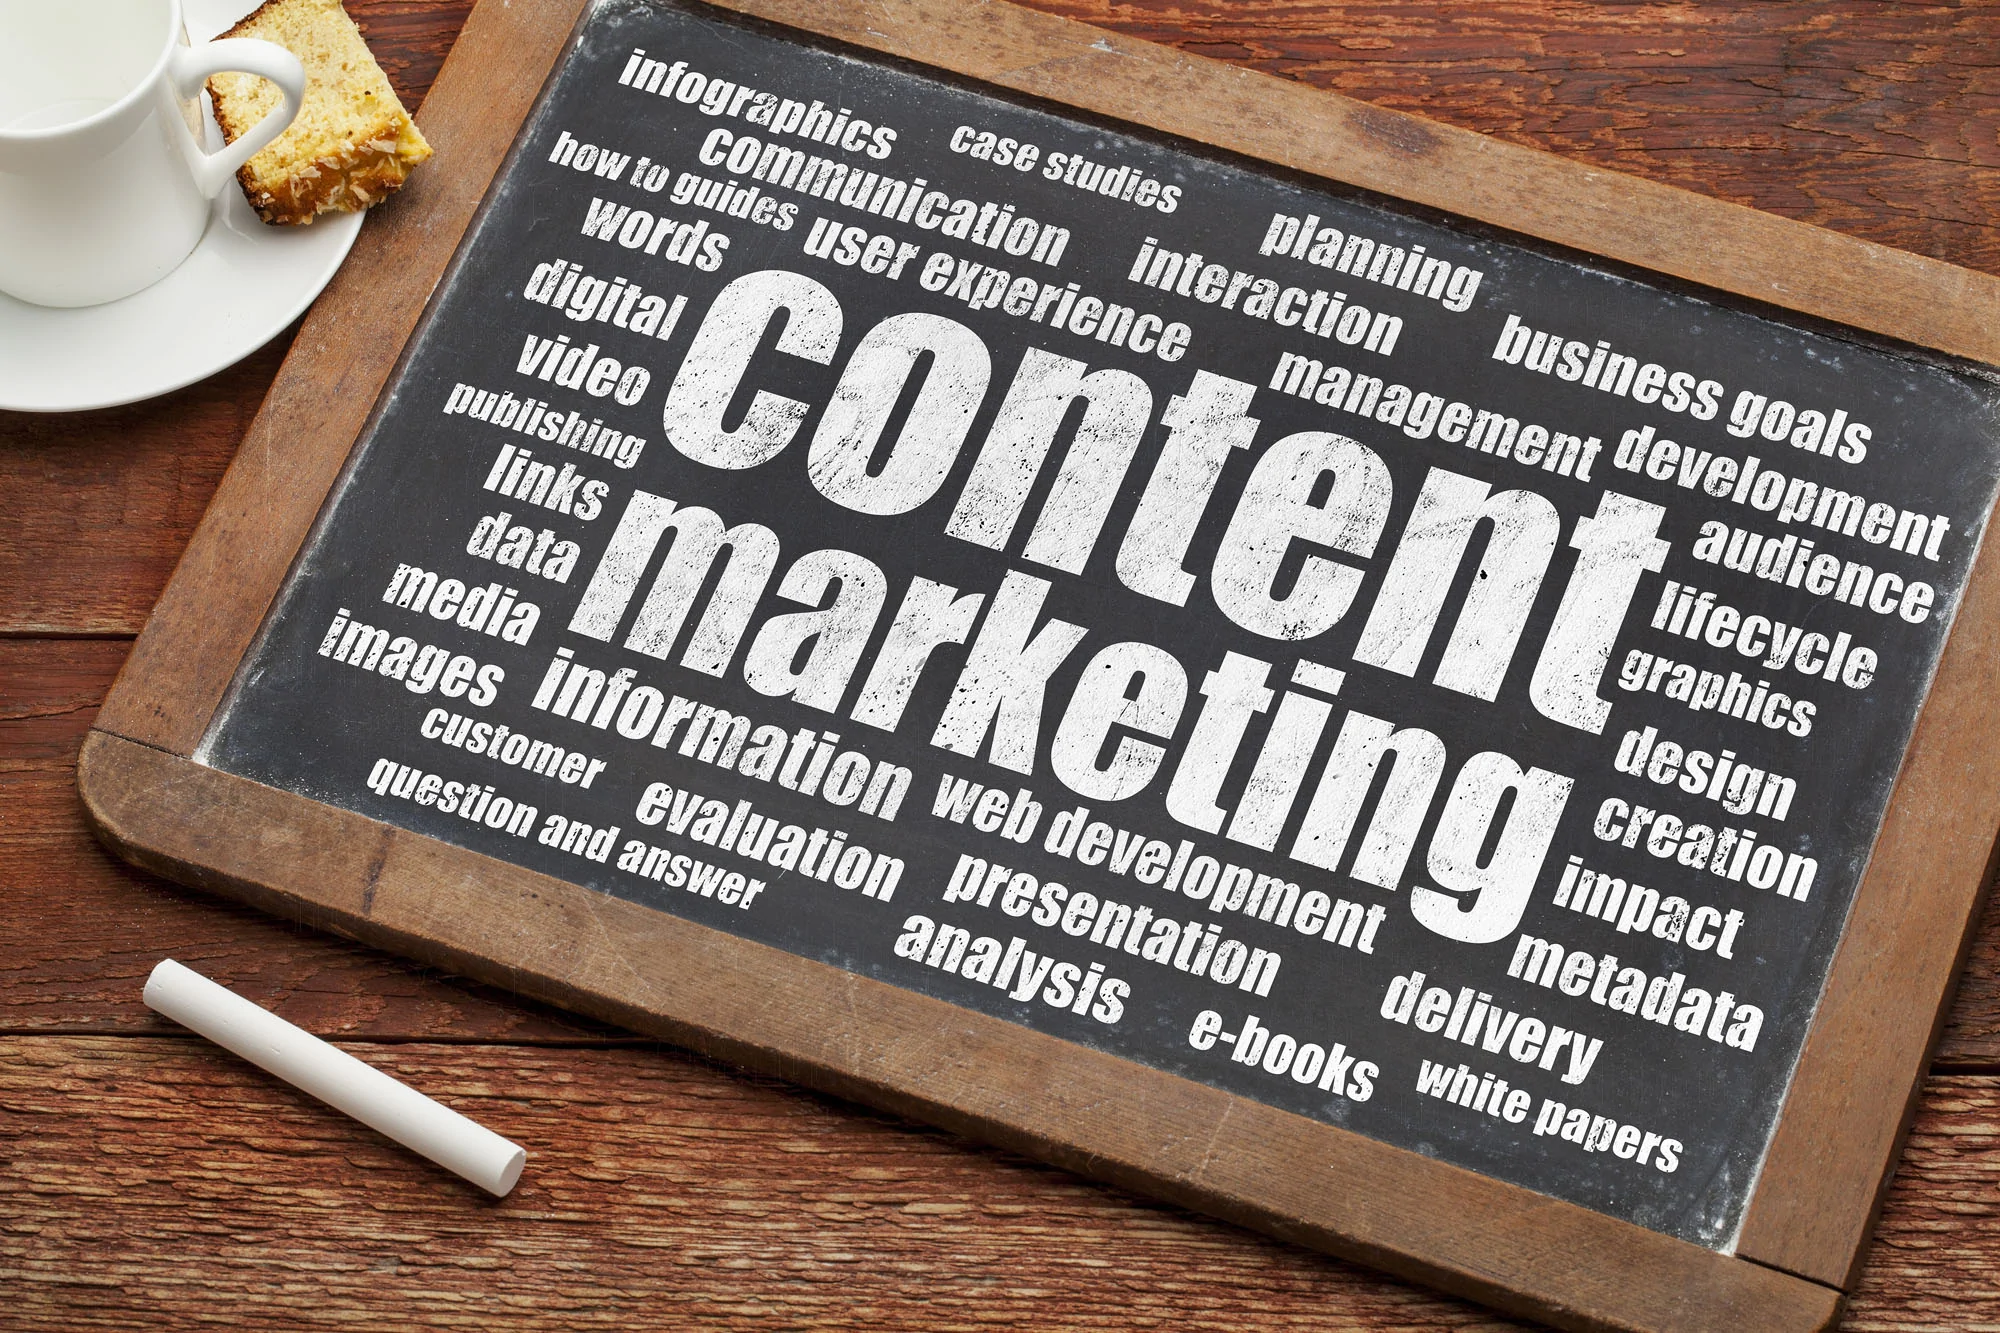 Content marketing courses online